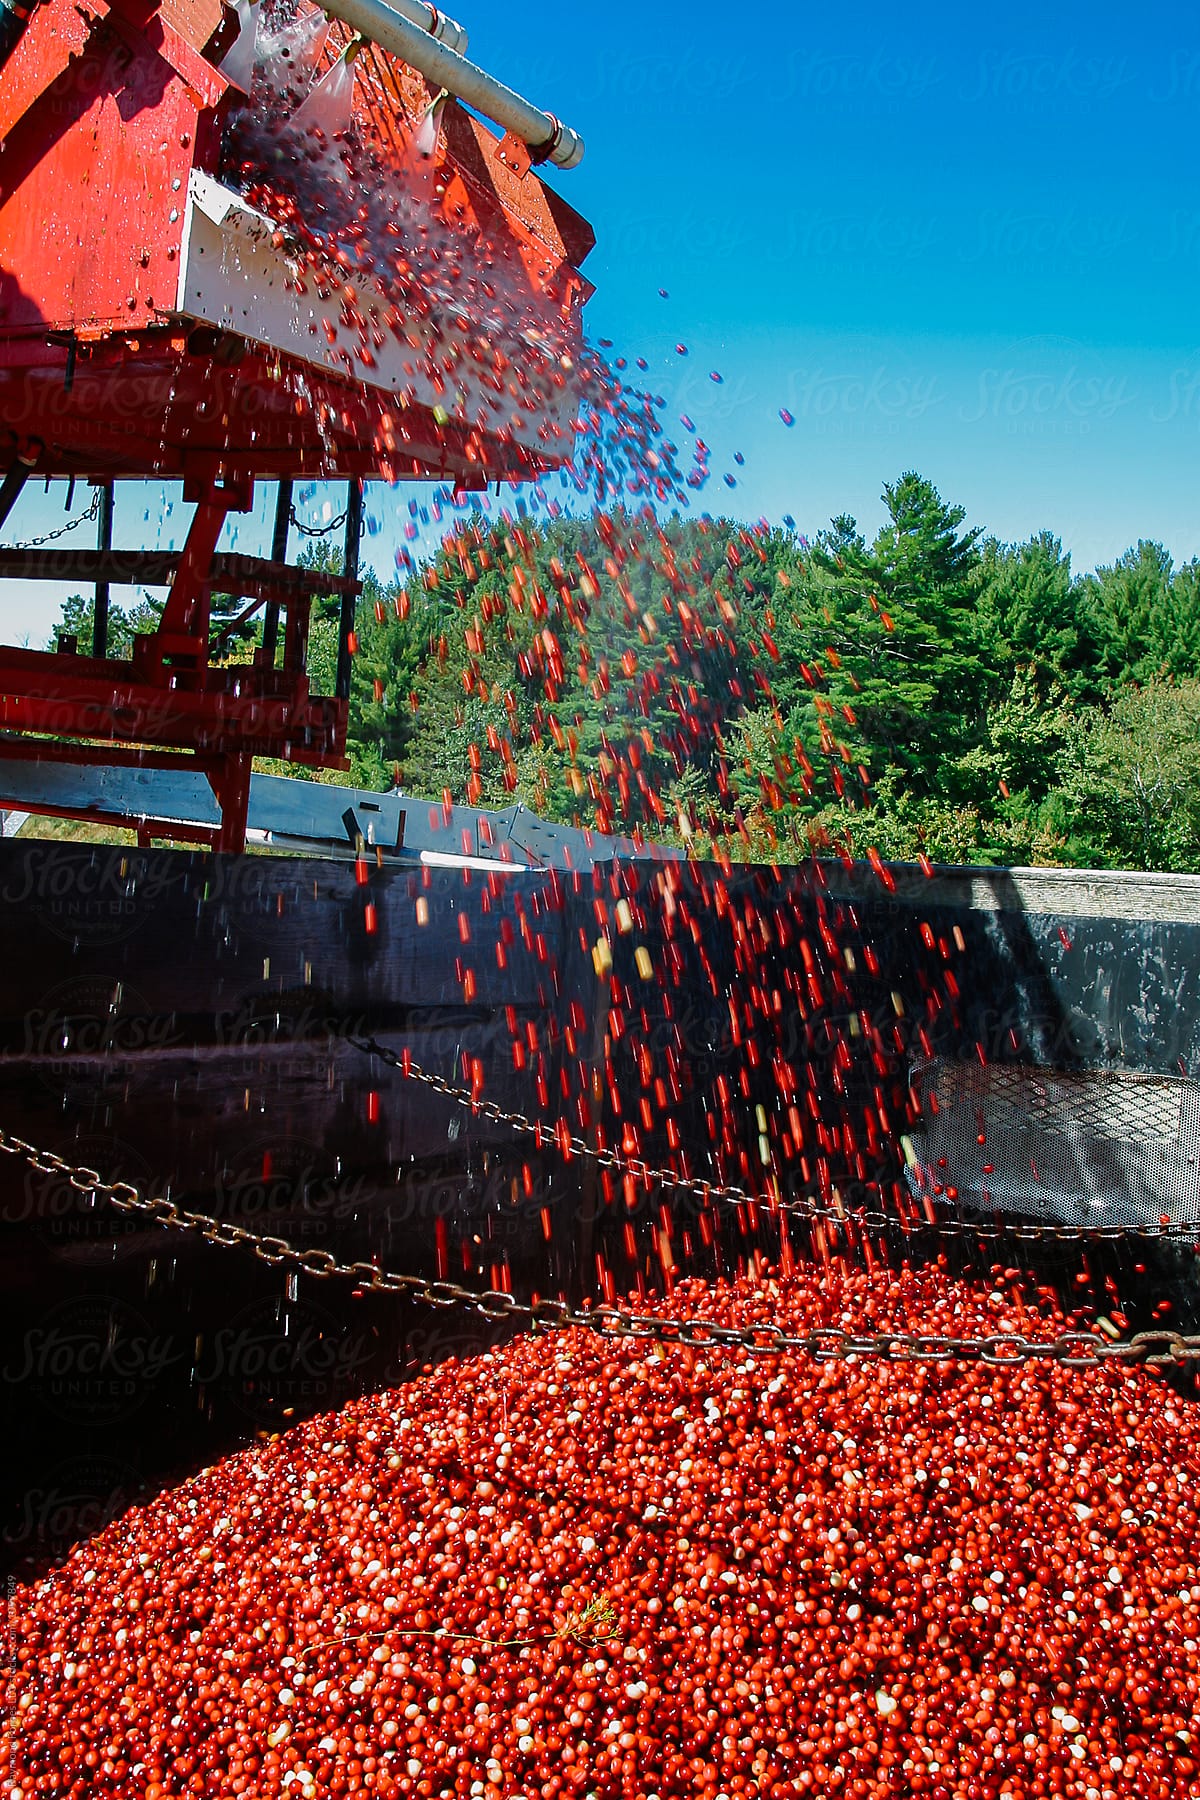 "Cranberry Harvest" by Stocksy Contributor "Raymond Forbes LLC" Stocksy